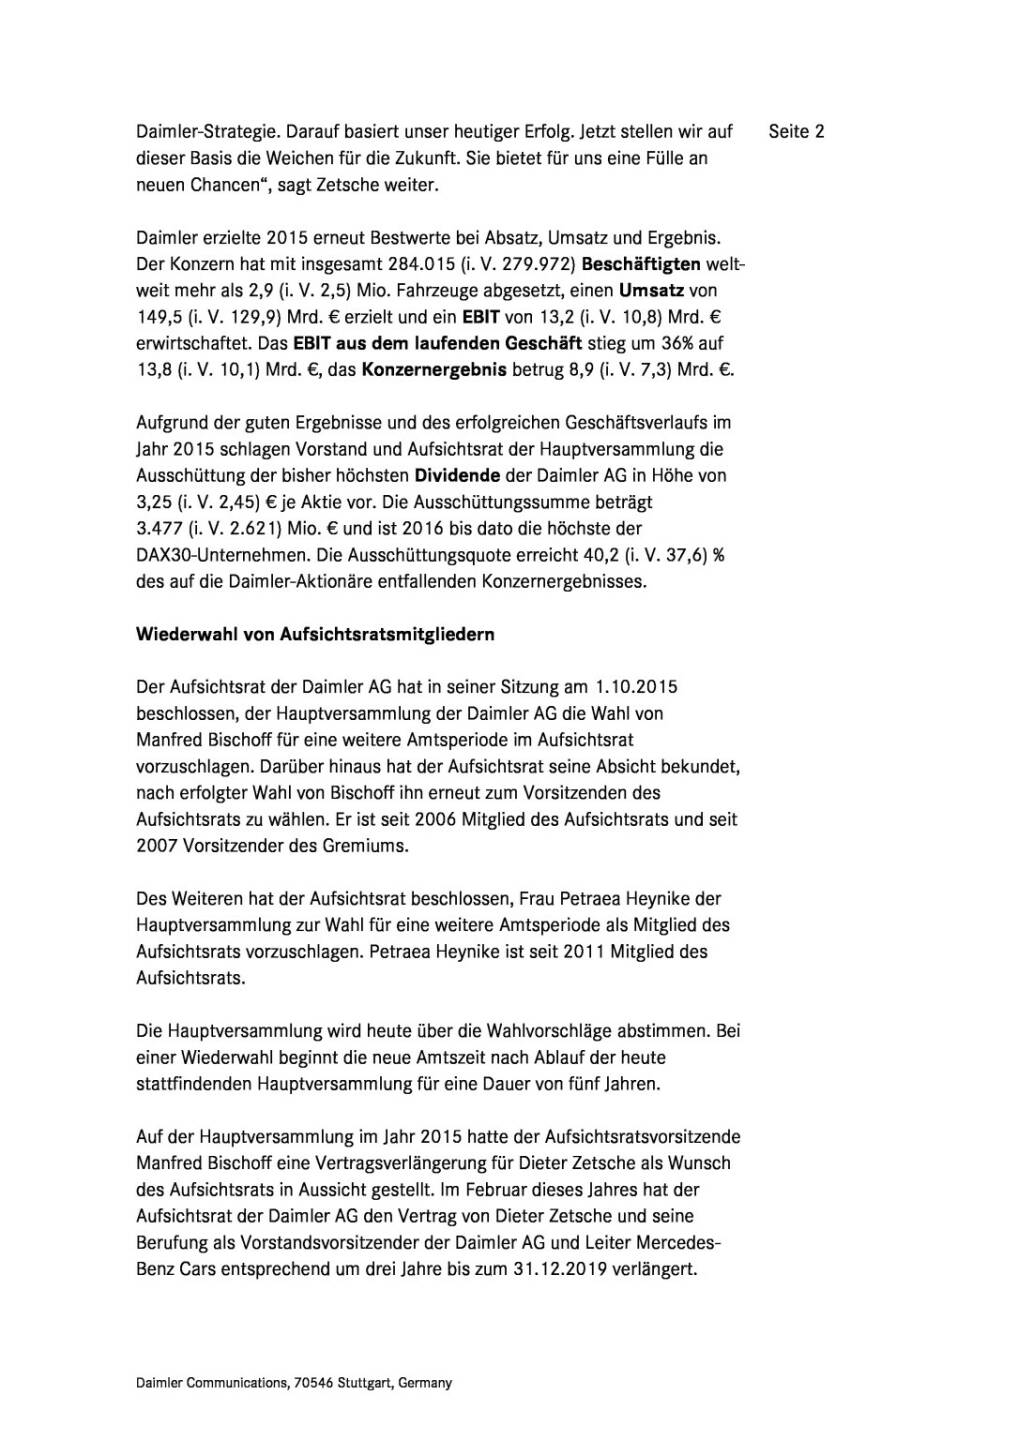 Daimler: Geschäftsjahr 2015, Seite 2/9, komplettes Dokument unter http://boerse-social.com/static/uploads/file_851_daimler_geschaftsjahr_2015.pdf